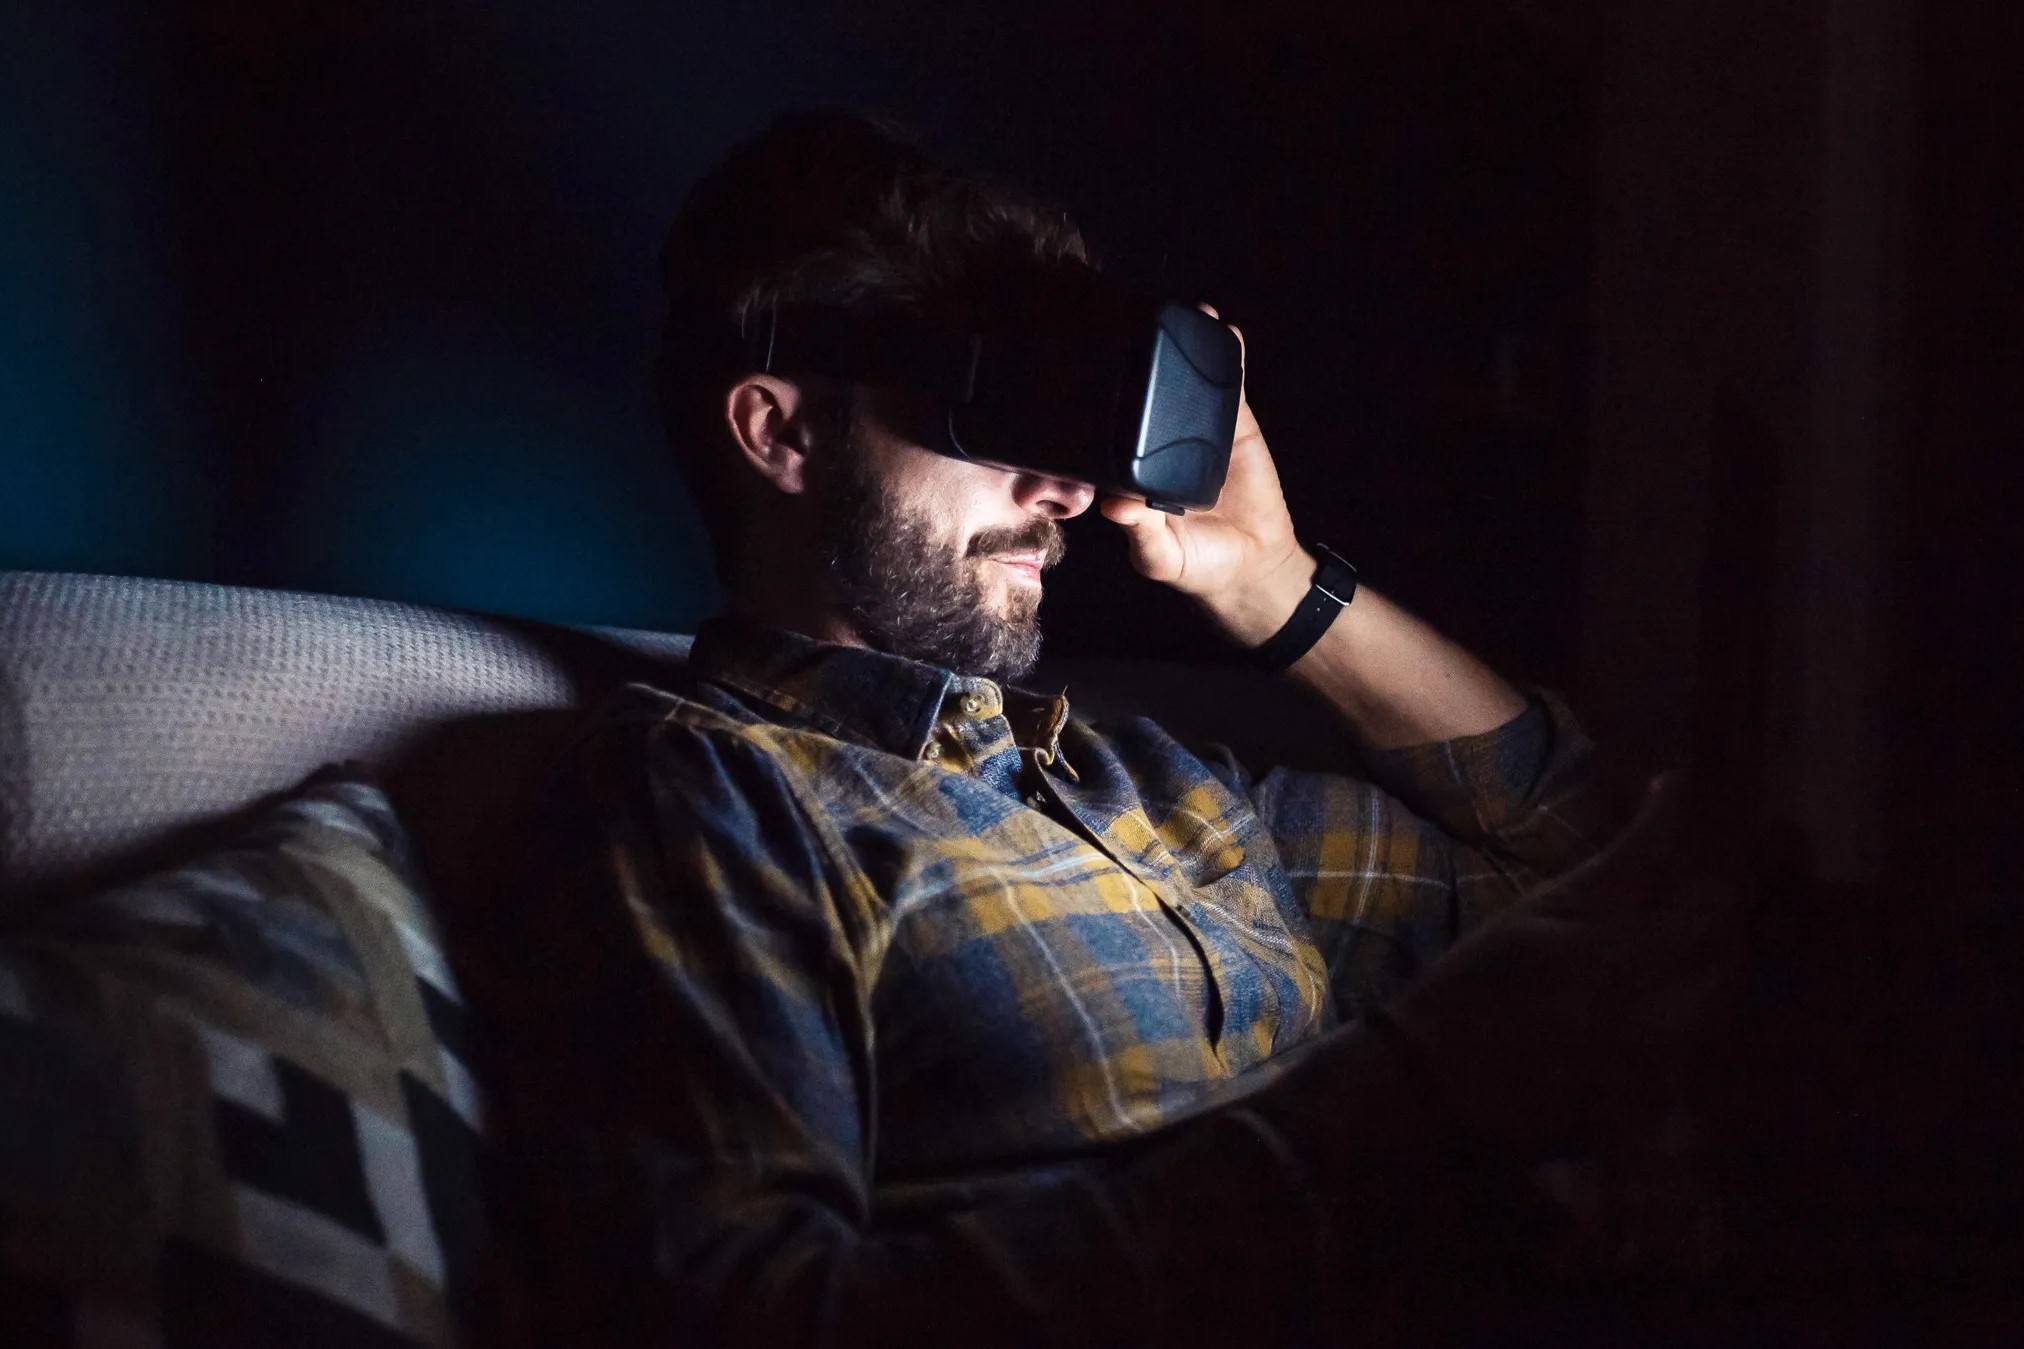 Multimedia In VR: Watching Videos On Gear VR